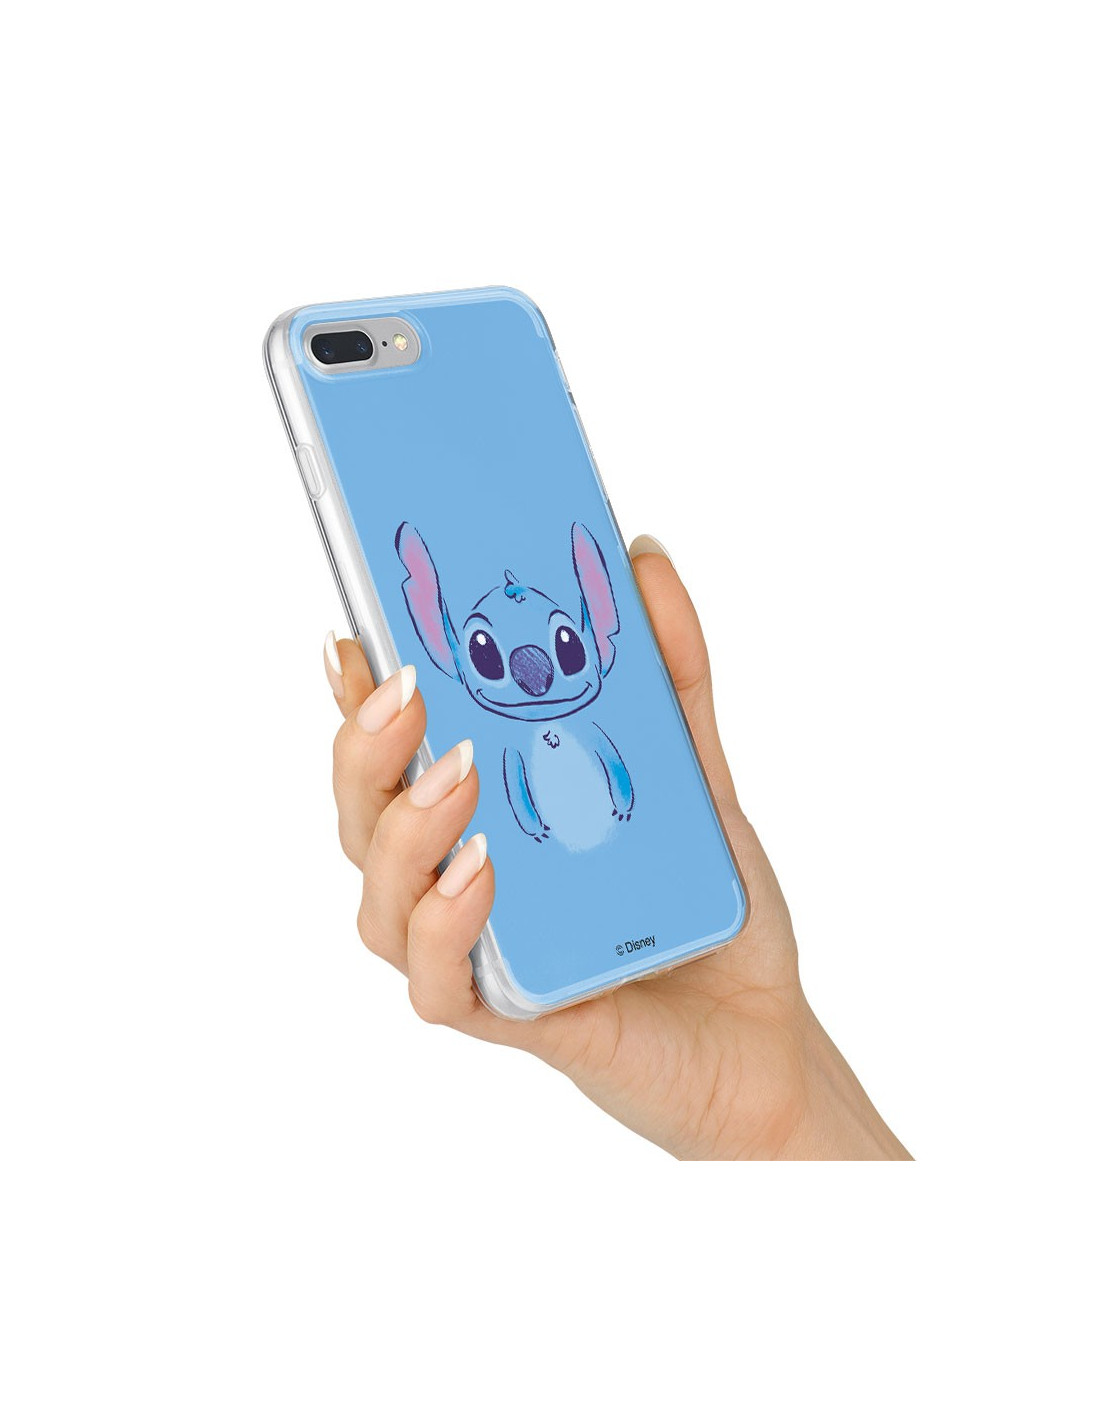 Funda para Xiaomi Mi 10T Lite Oficial de Disney Stitch Azul - Lilo & Stitch